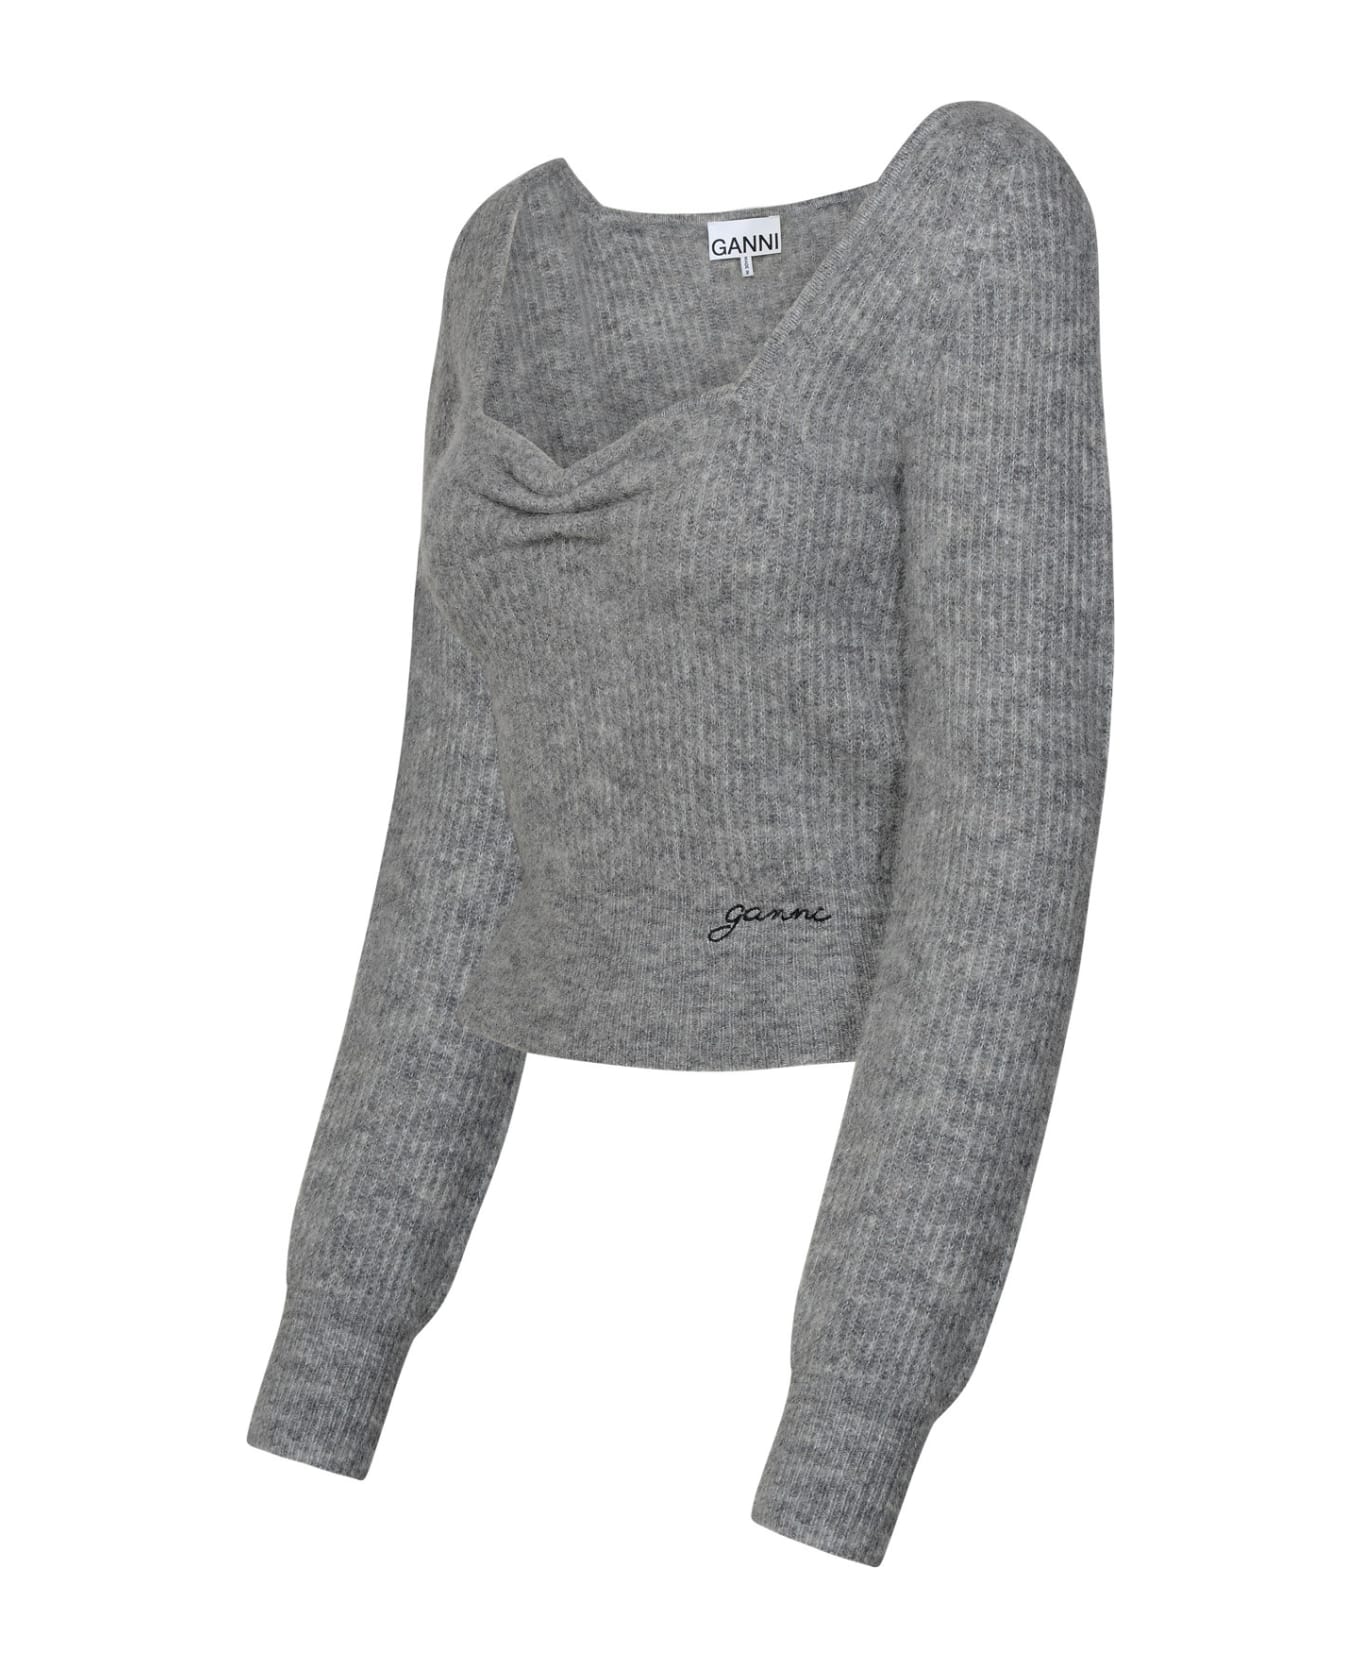 Ganni Grey Merino Blend Sweater - Grey